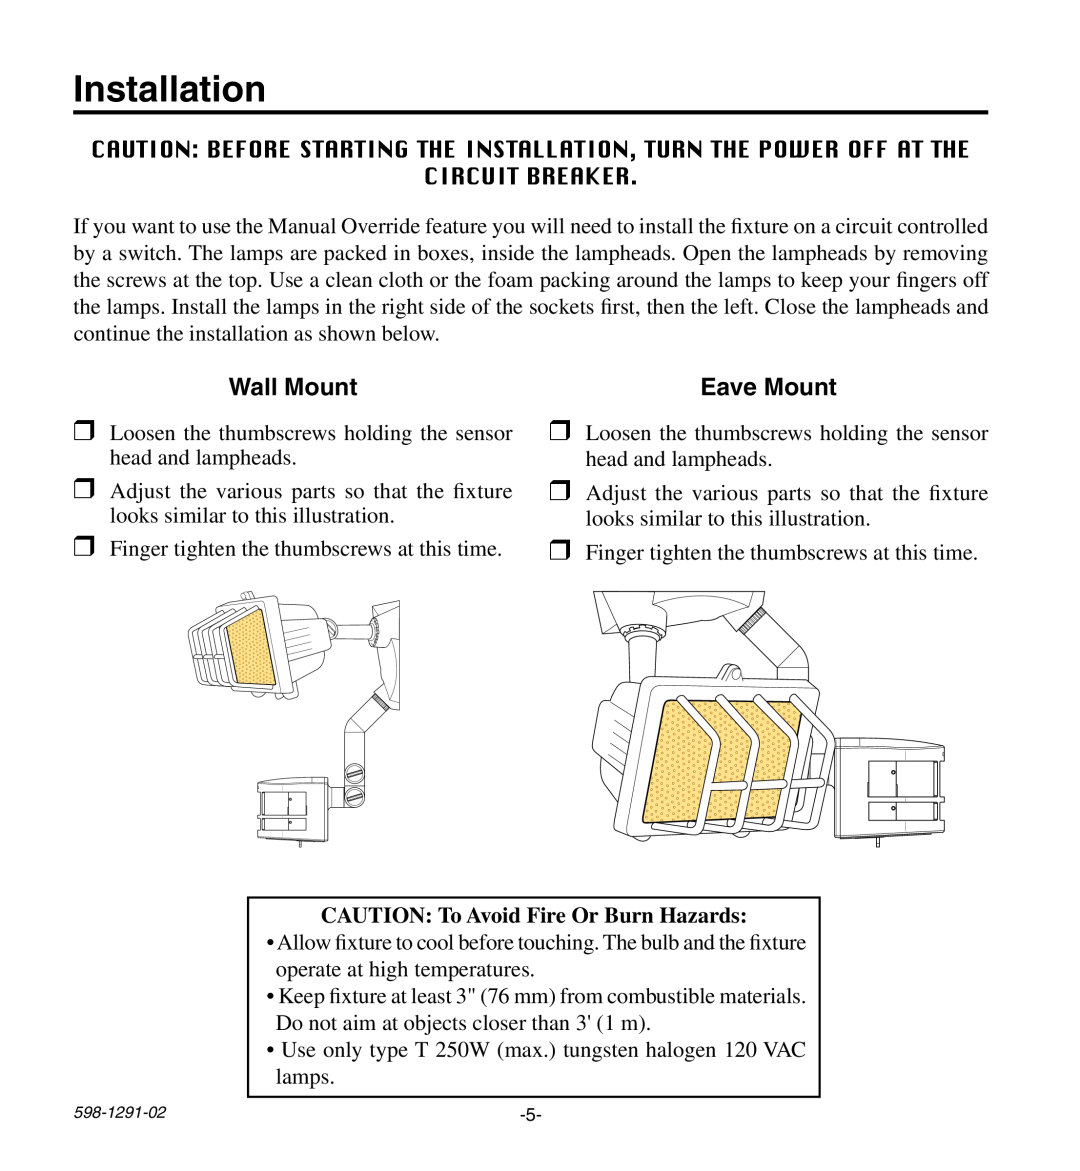 Heath Zenith UT-9260-BZ Installation, Wall Mount, Eave Mount, circuit breaker, CAUTION: To Avoid Fire Or Burn Hazards 